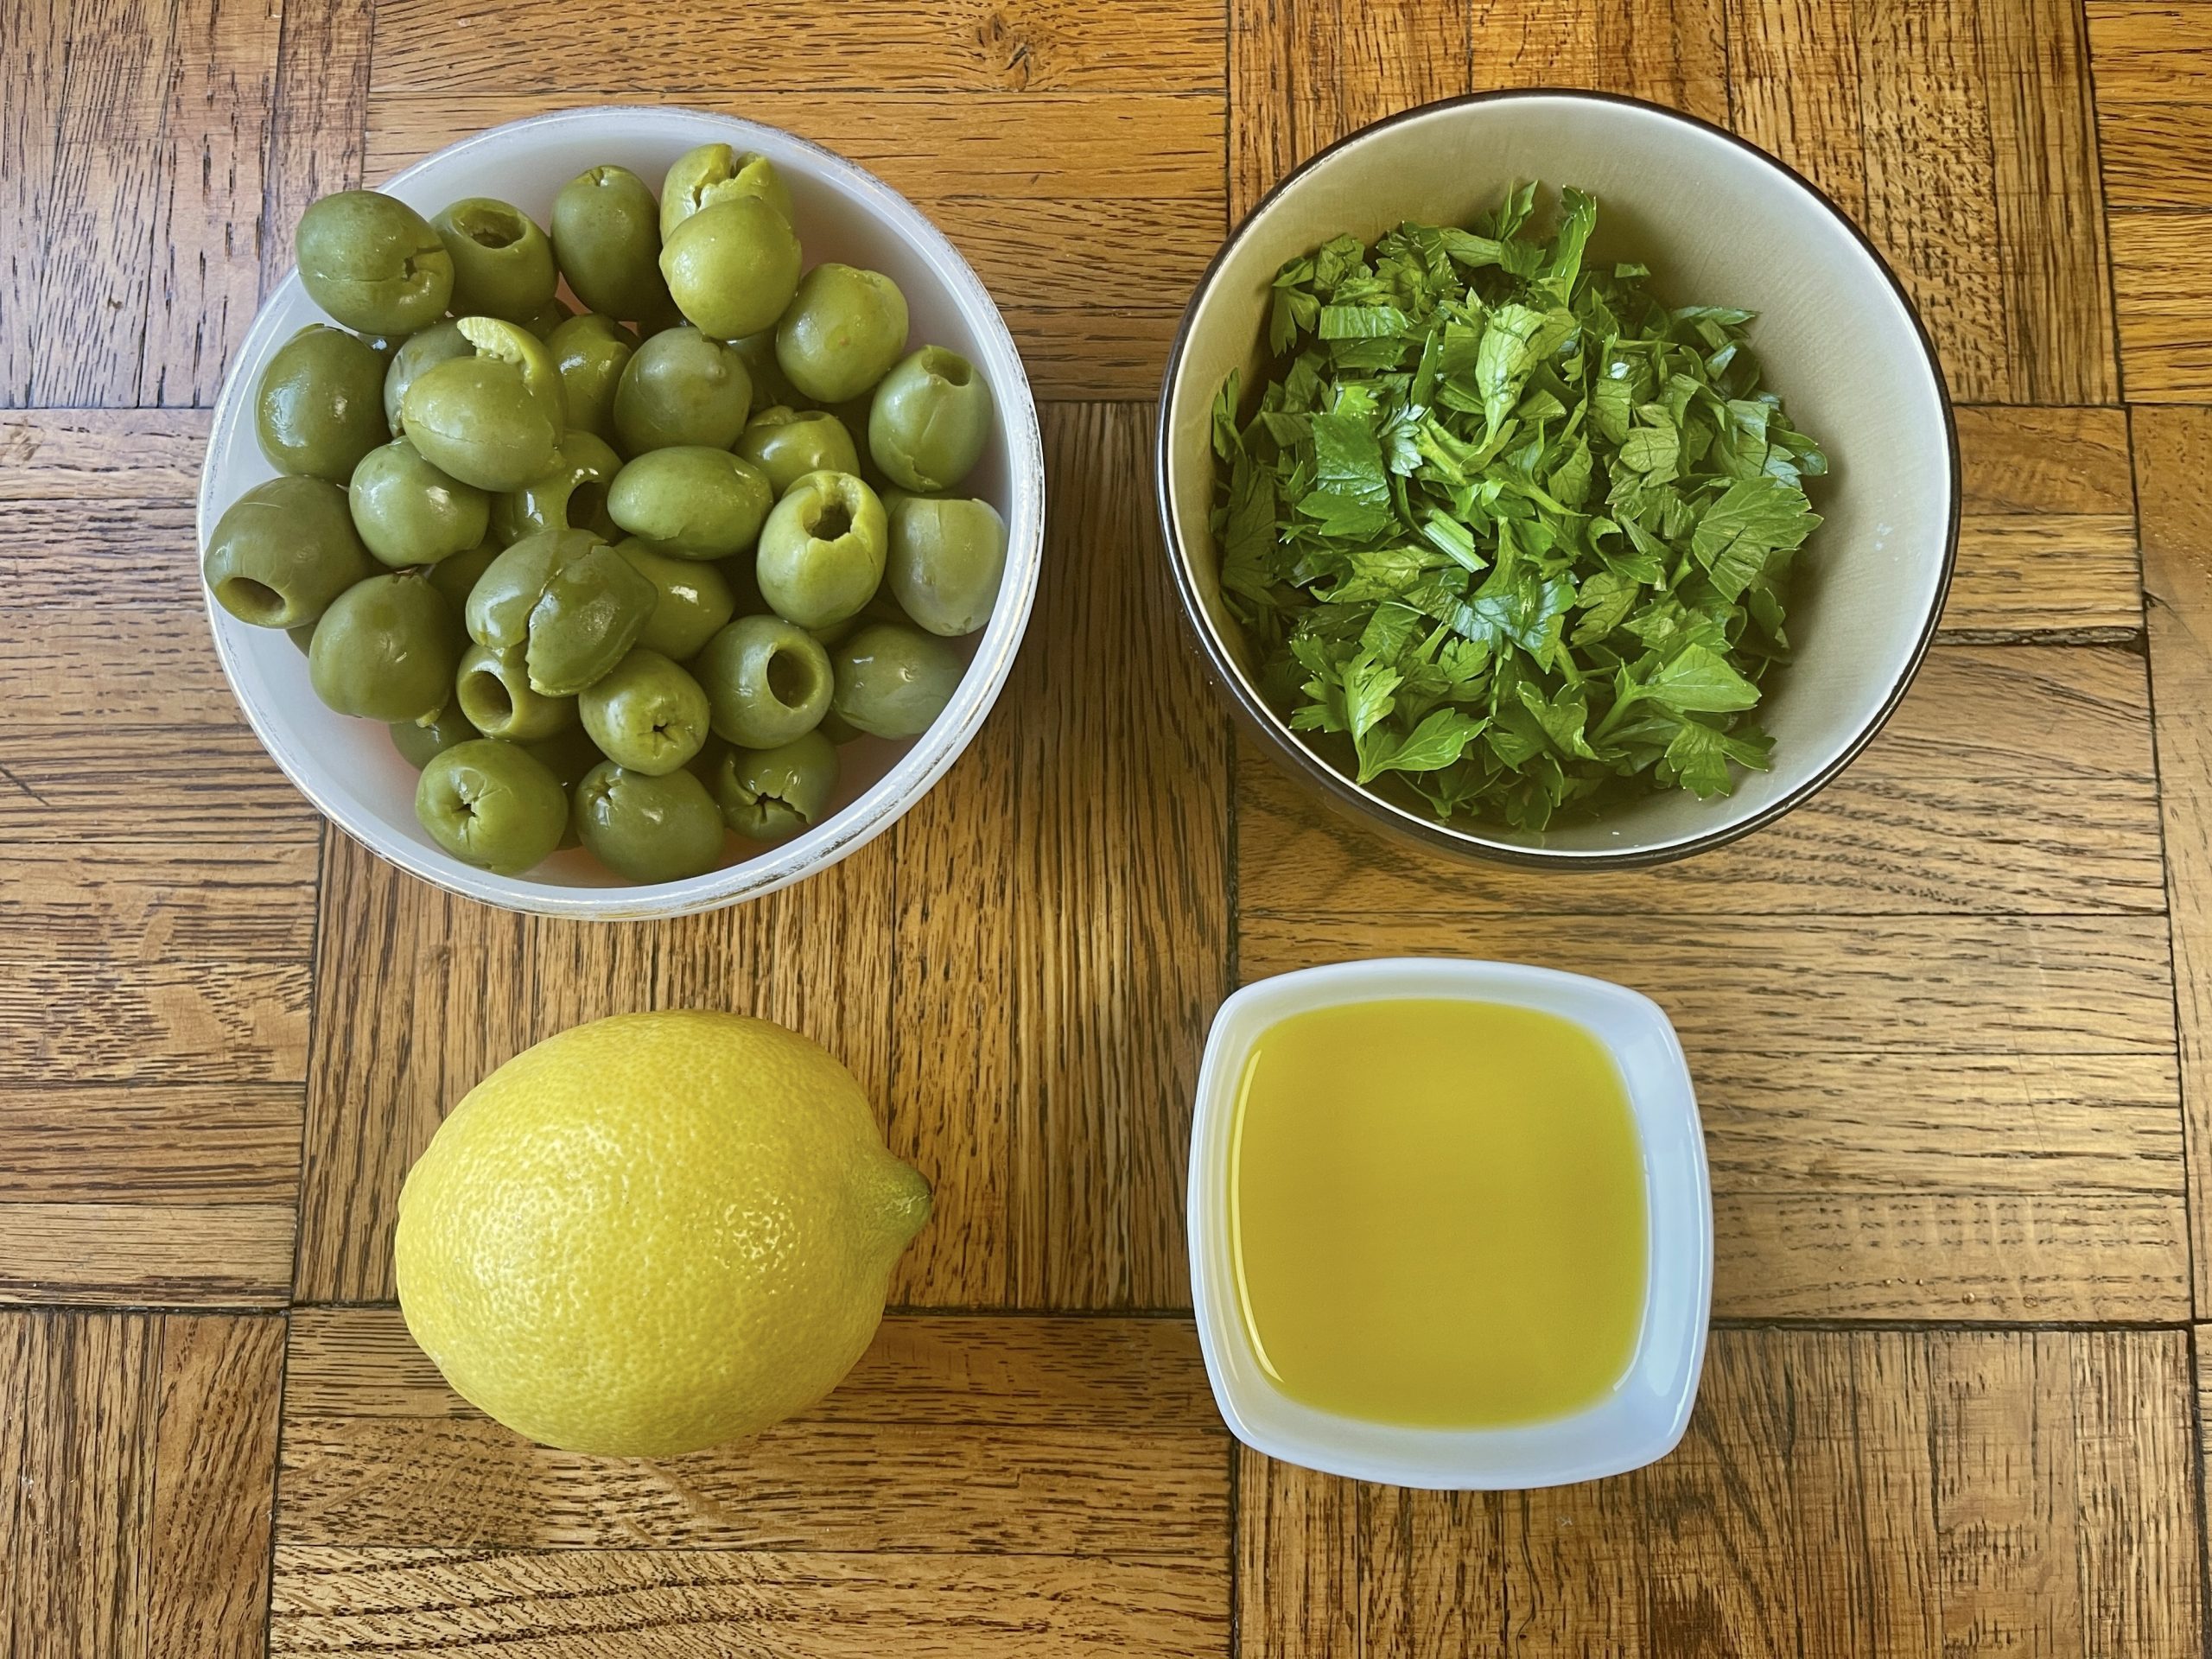 olive herb dressing ingredients - castelvetrano olives, parsley, lemon and olive oil